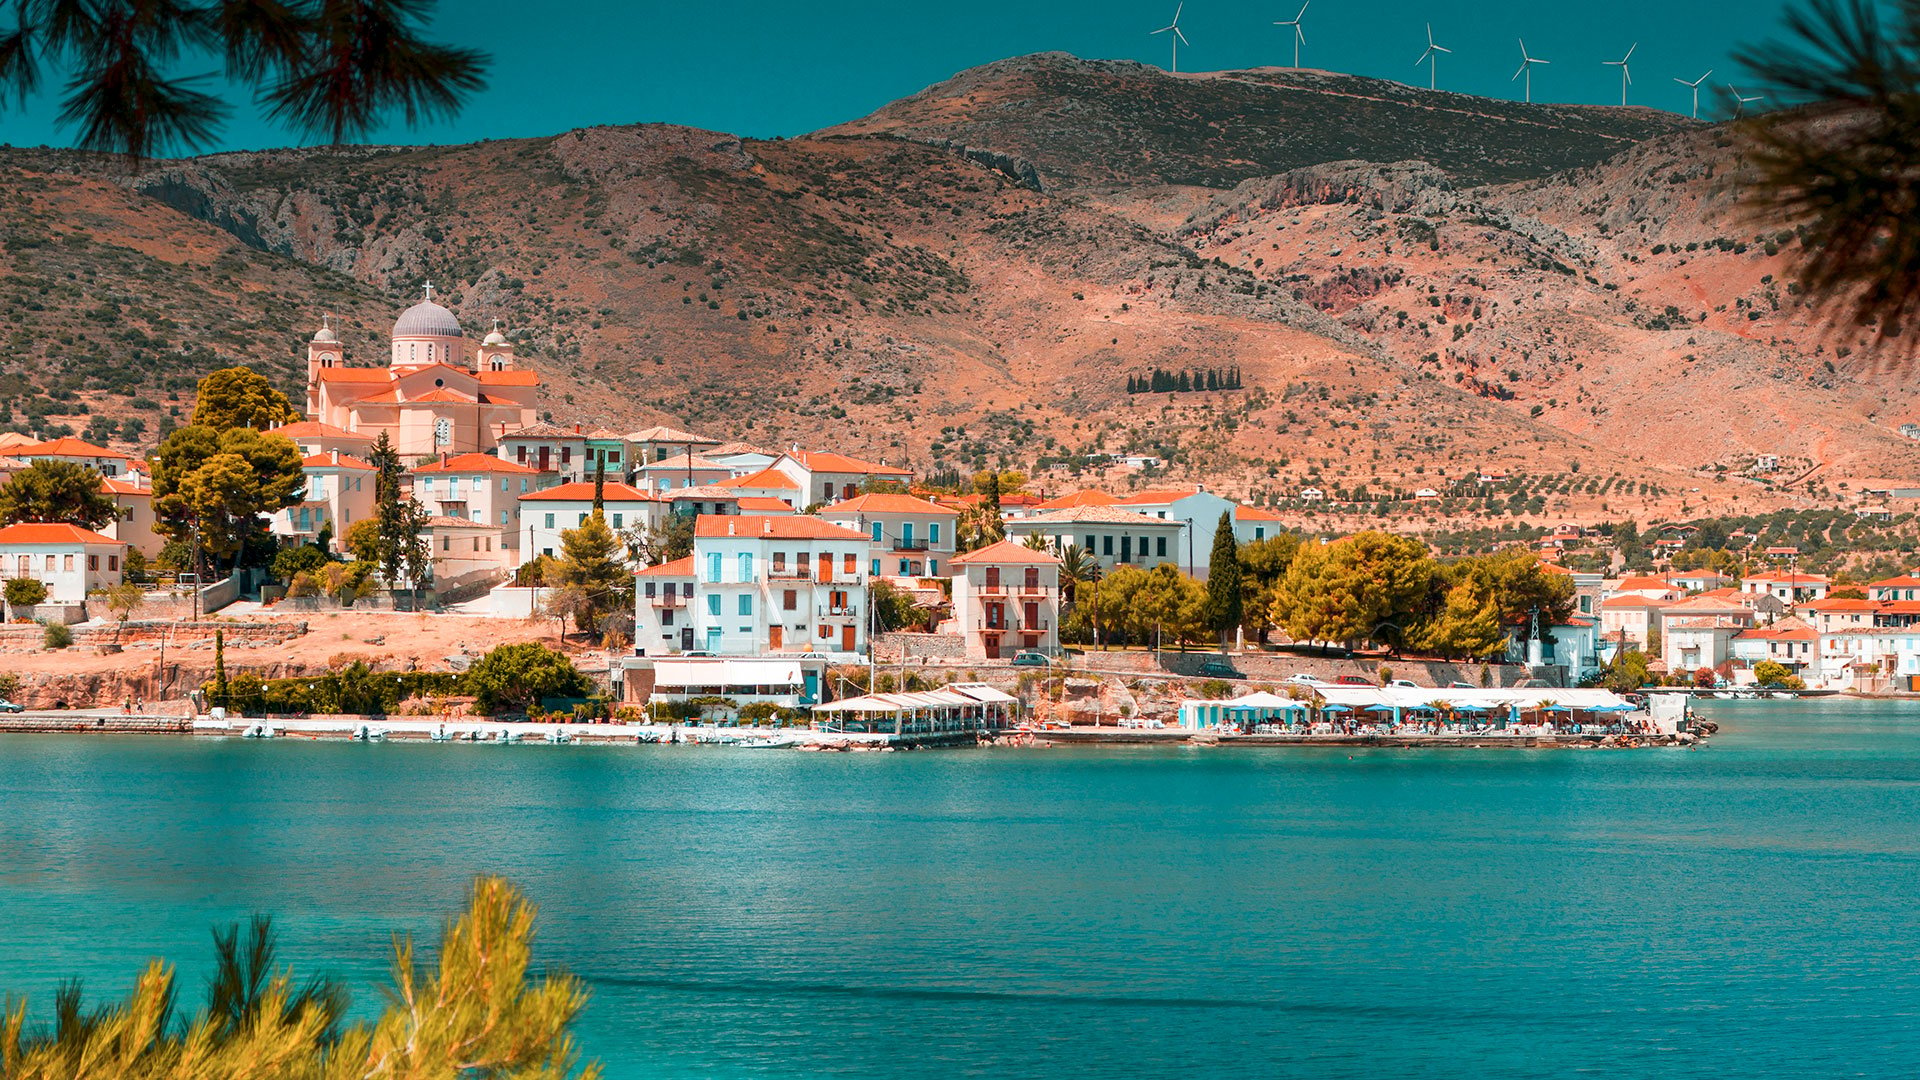 Galaxidi coastal town in Central Greece